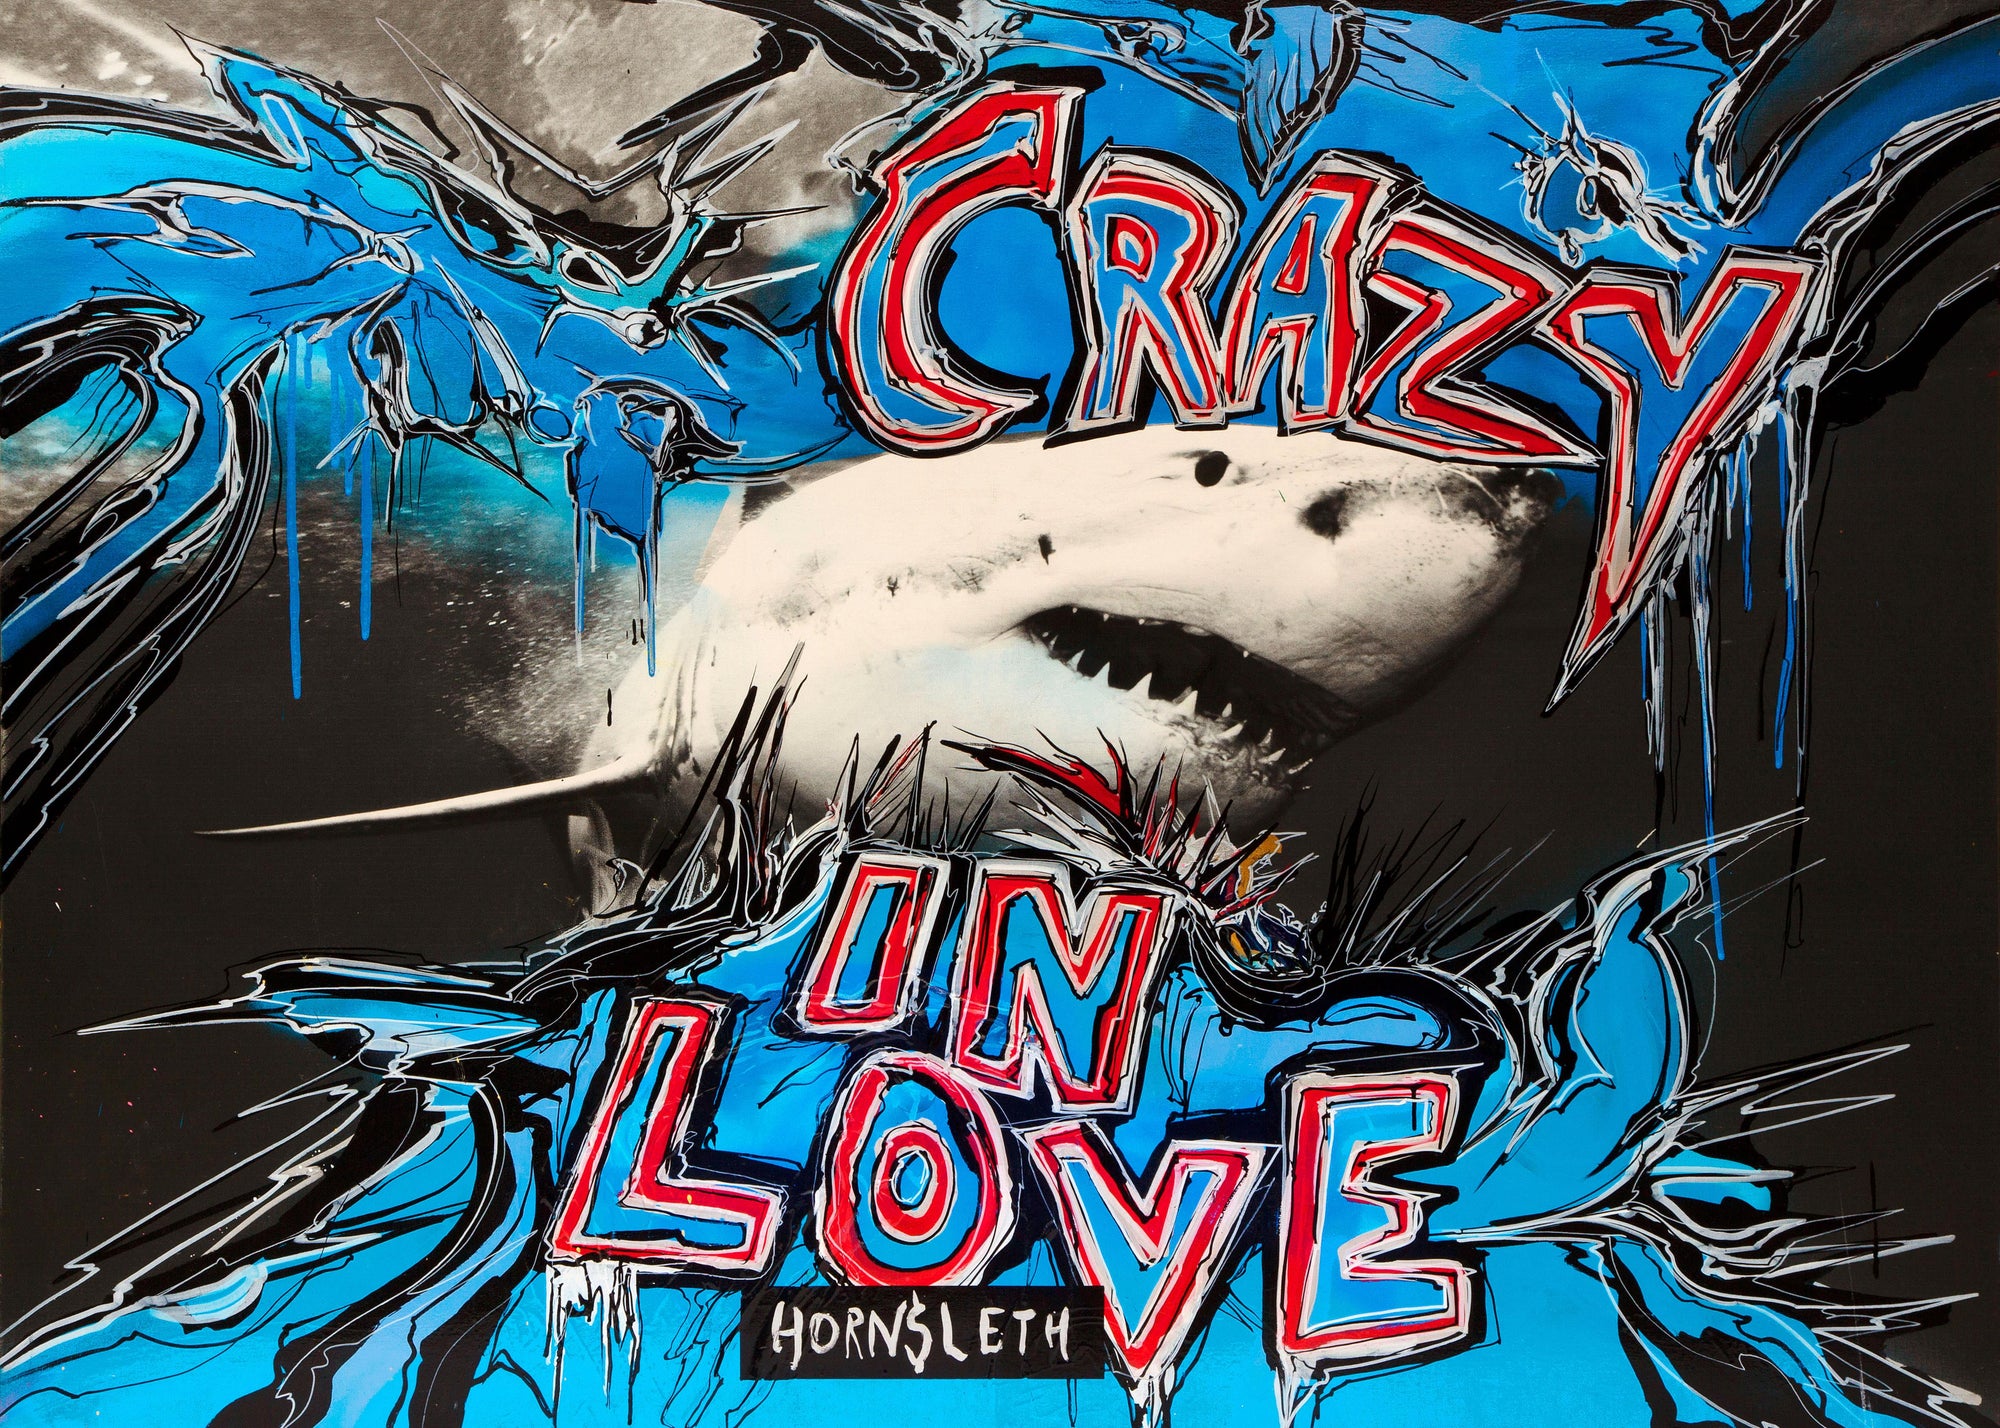 Crazy in love shark - Poster by Hornsleth